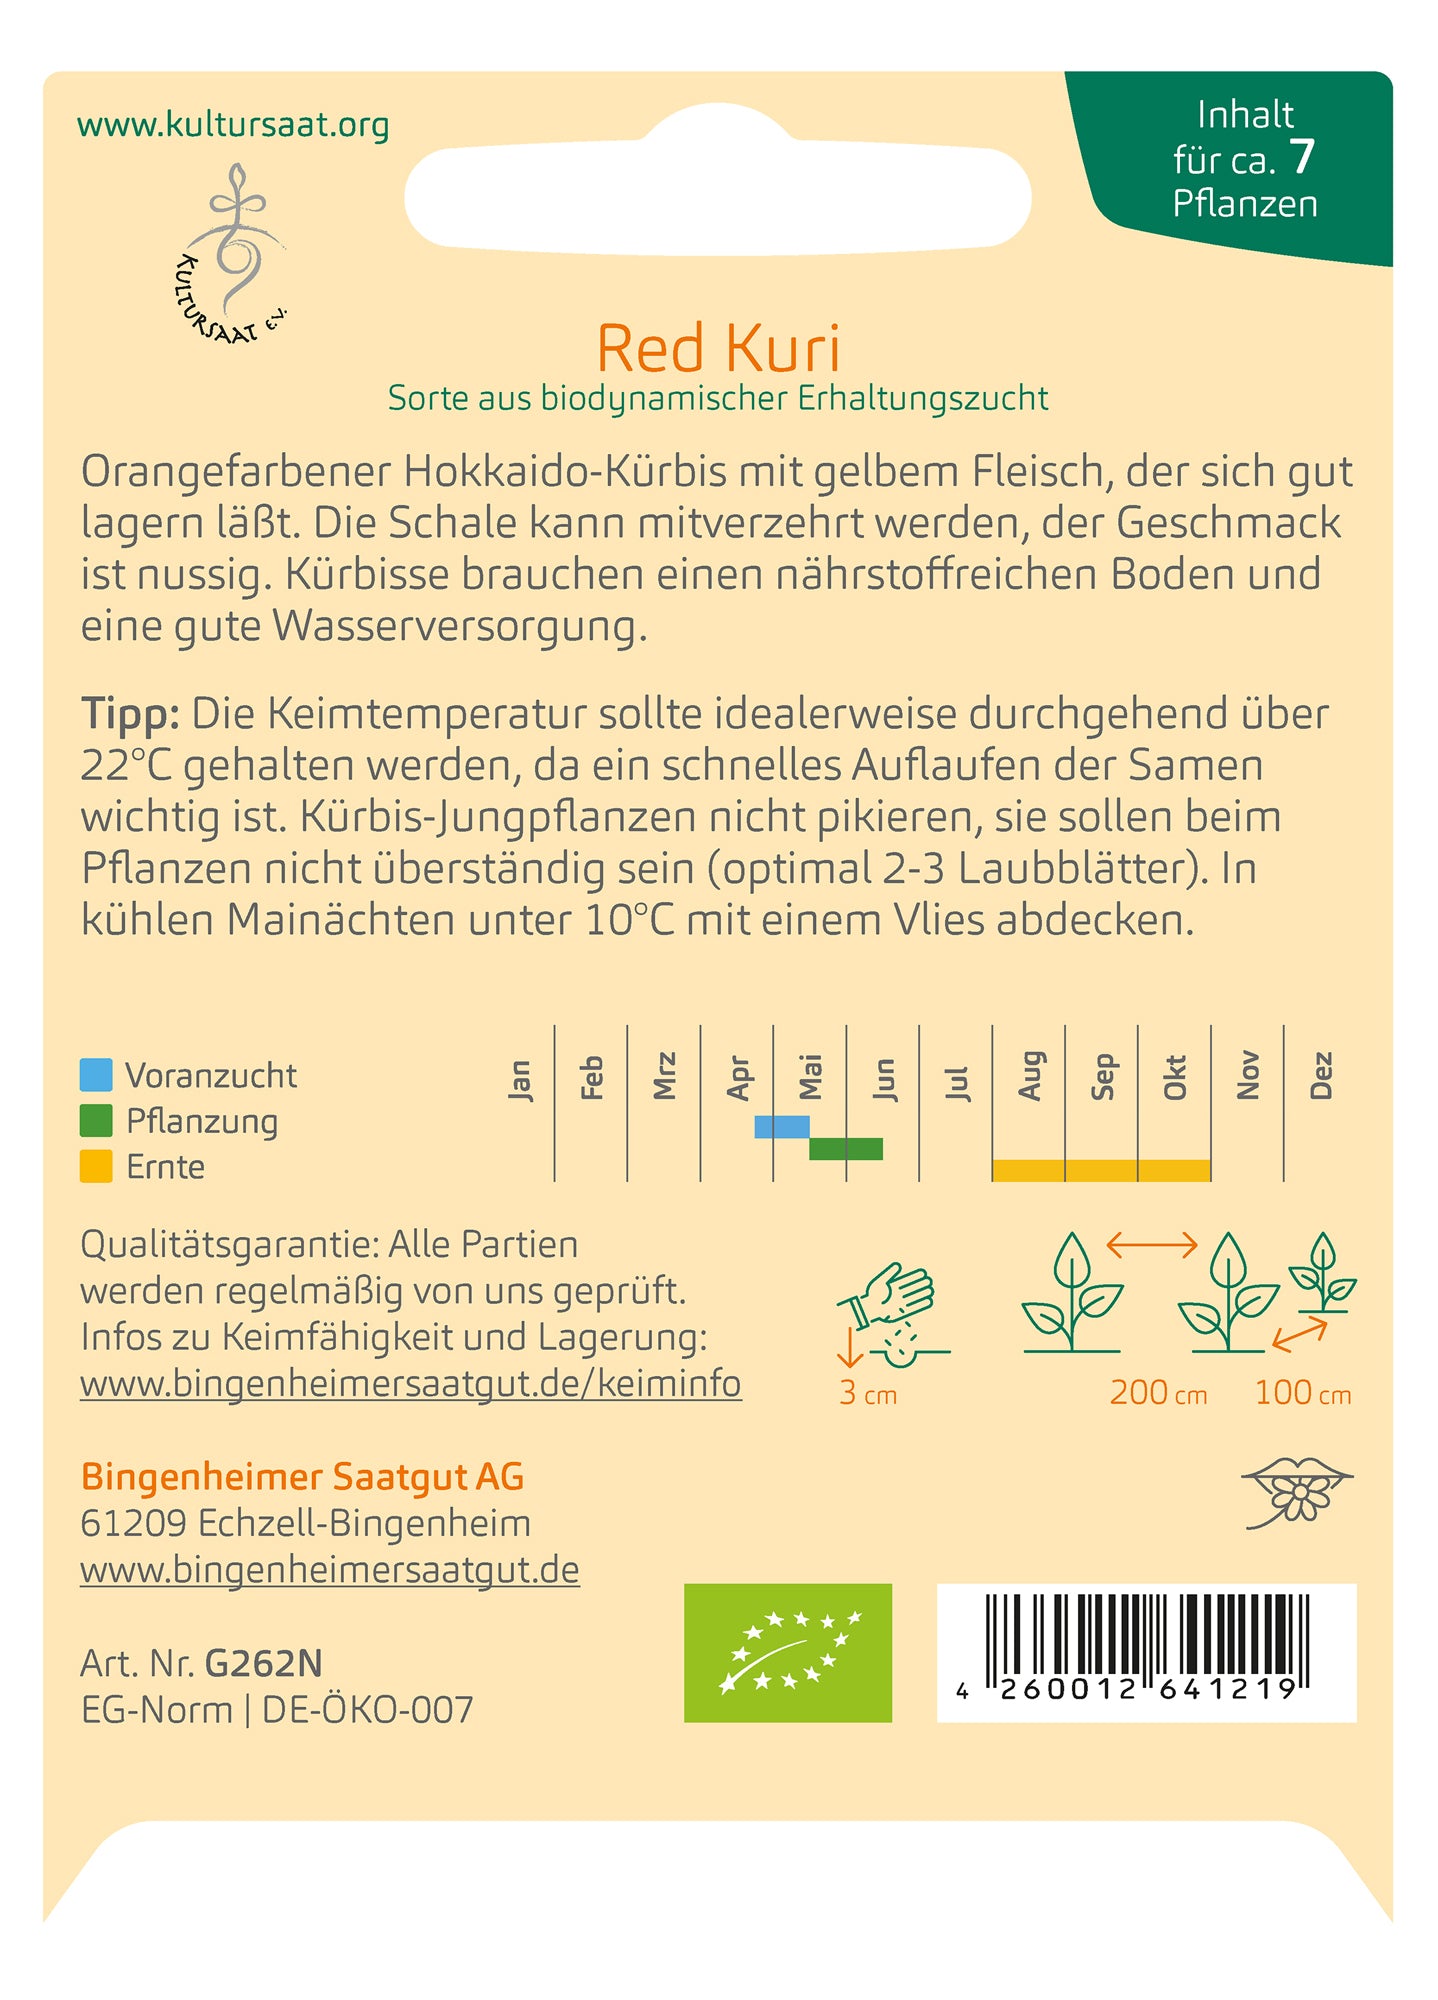 Kürbis Red Kuri | BIO Kürbissamen von Bingenheimer Saatgut